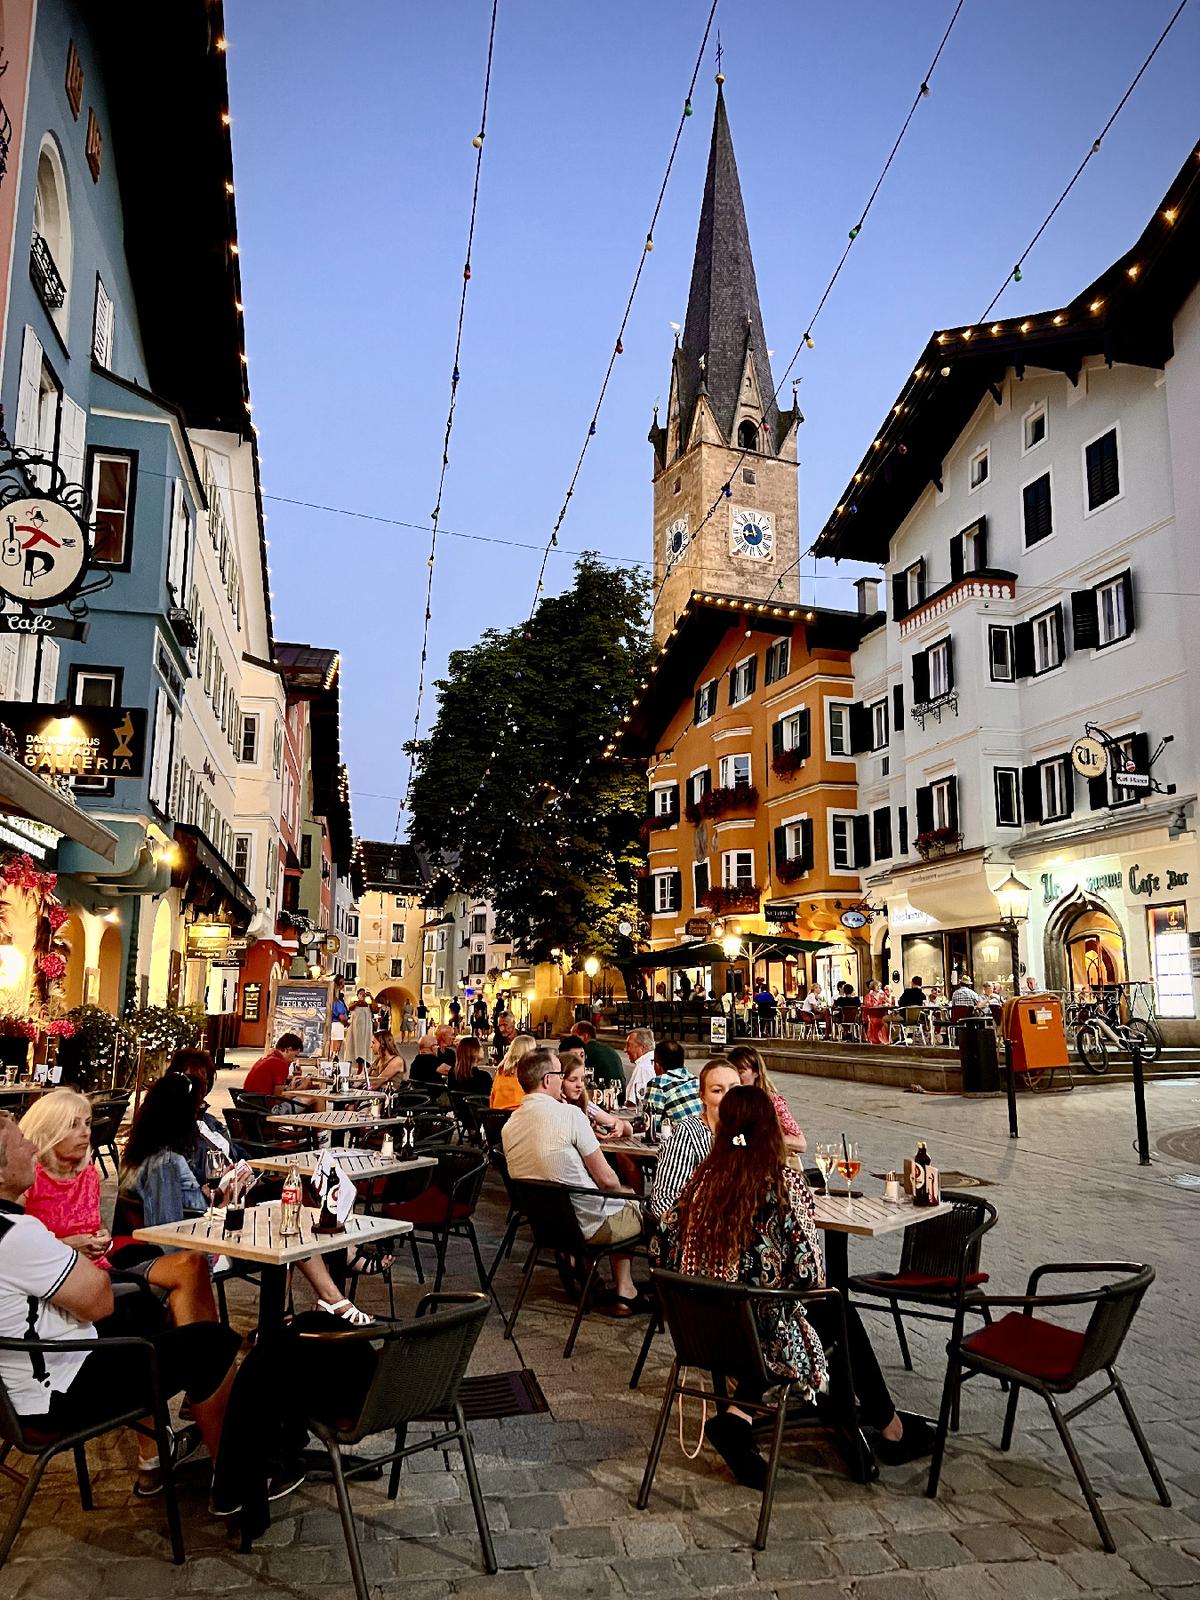 Visitors enjoy an evening in Kitzbühel in Austria’s Tyrolean Alps. (Margot Black)